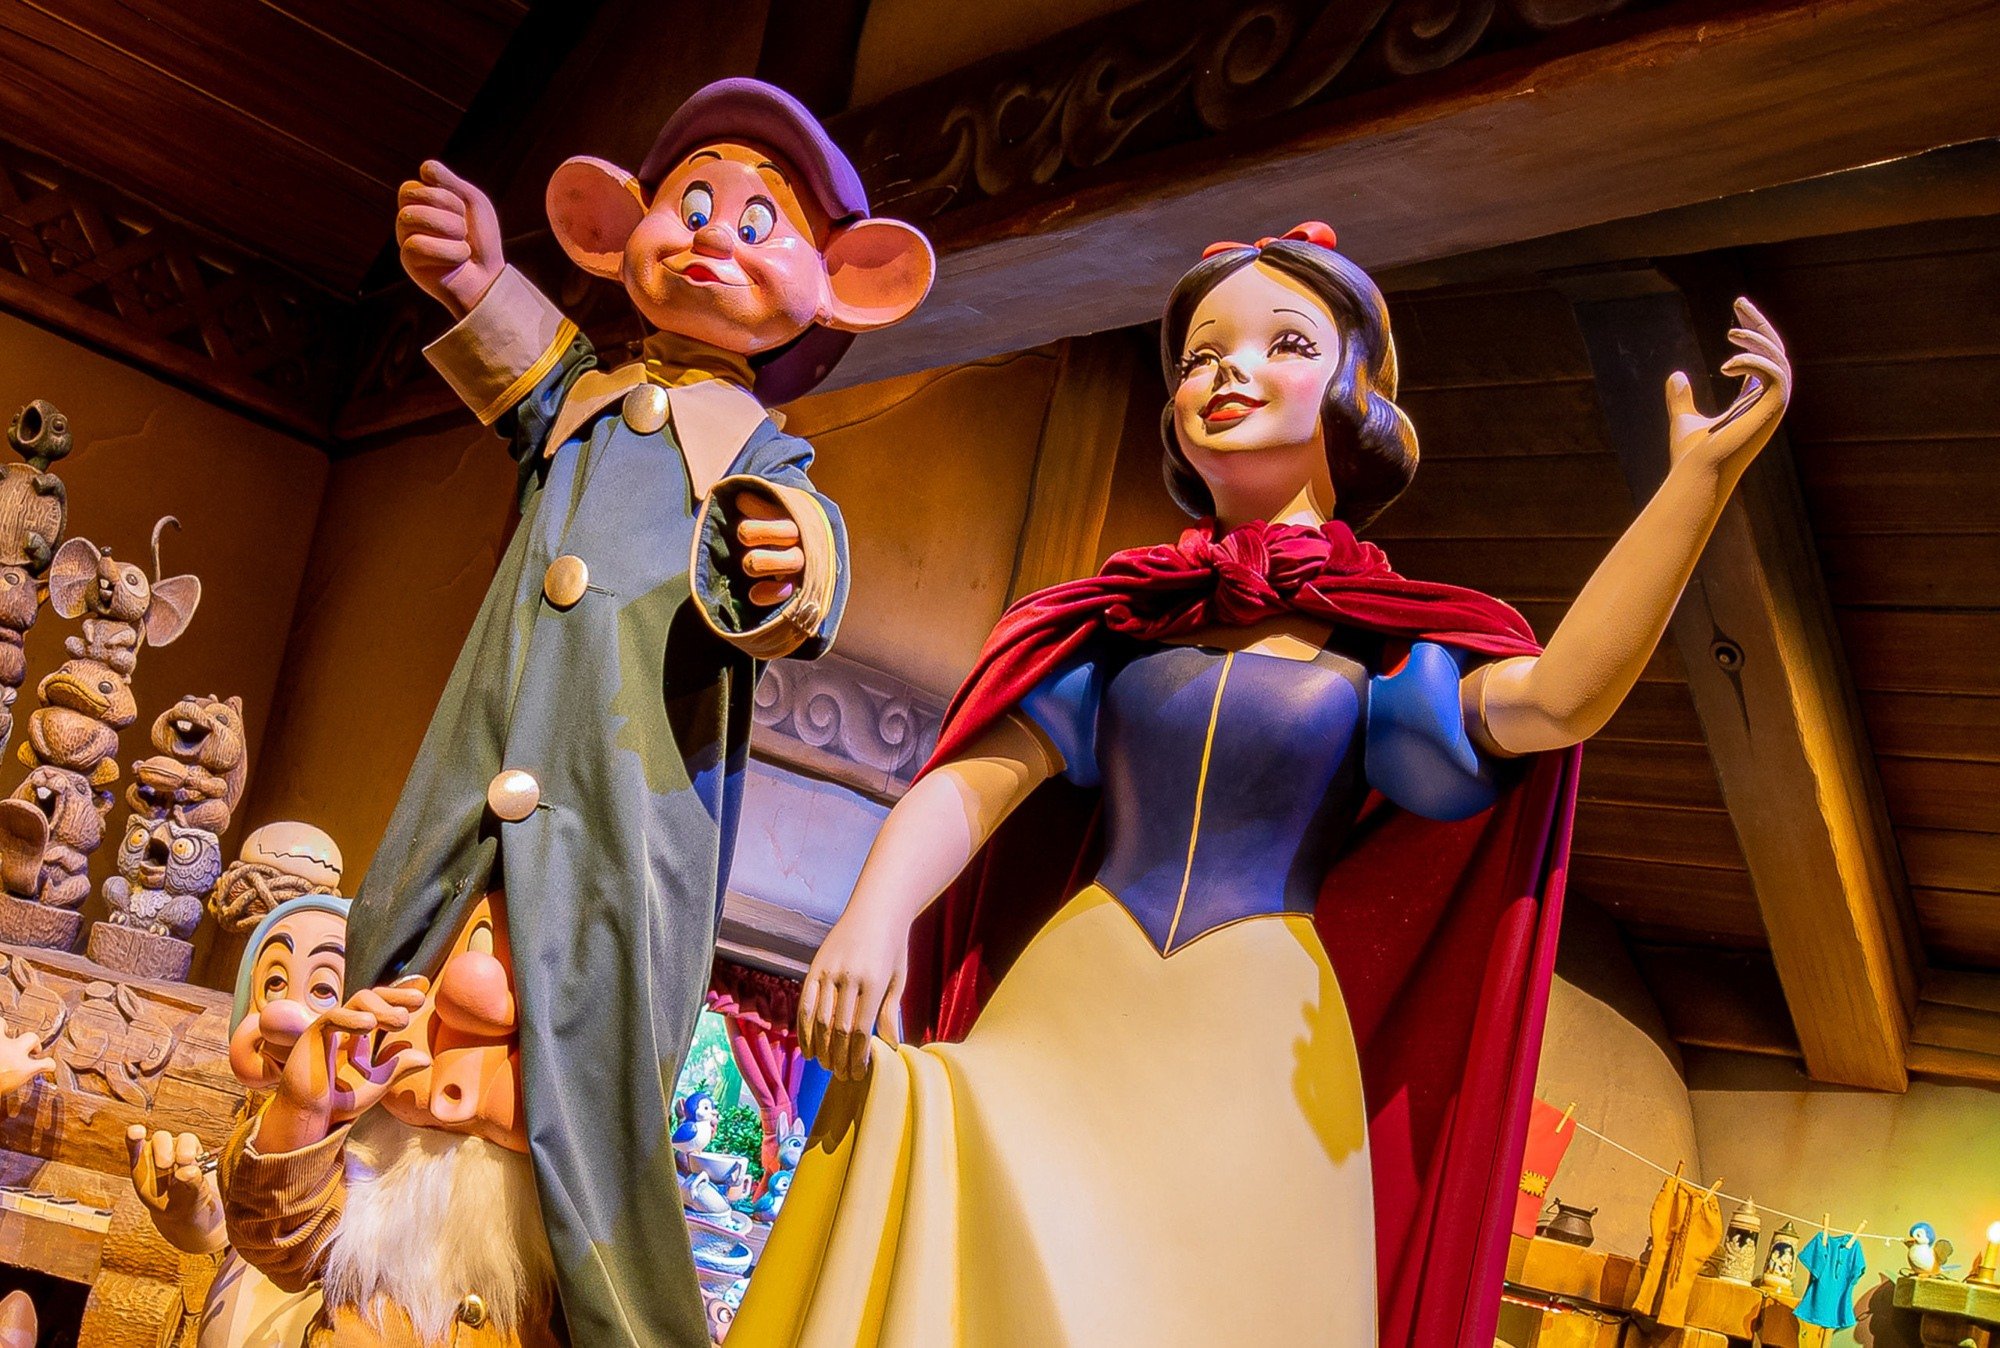 Snow White's Enchanted Wish ride at Disneyland